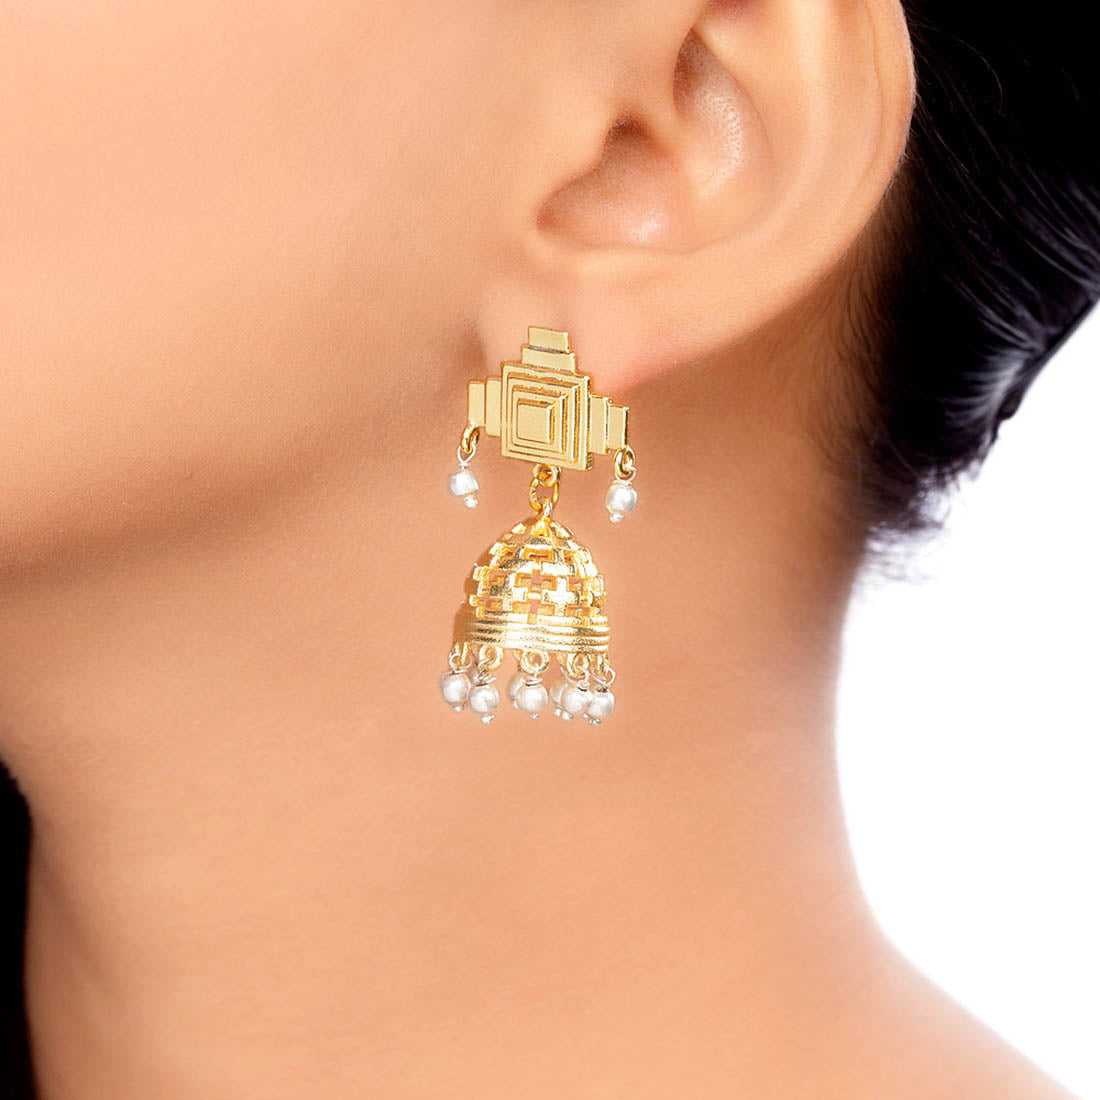 Baori Jhumka Style Drop Earrings